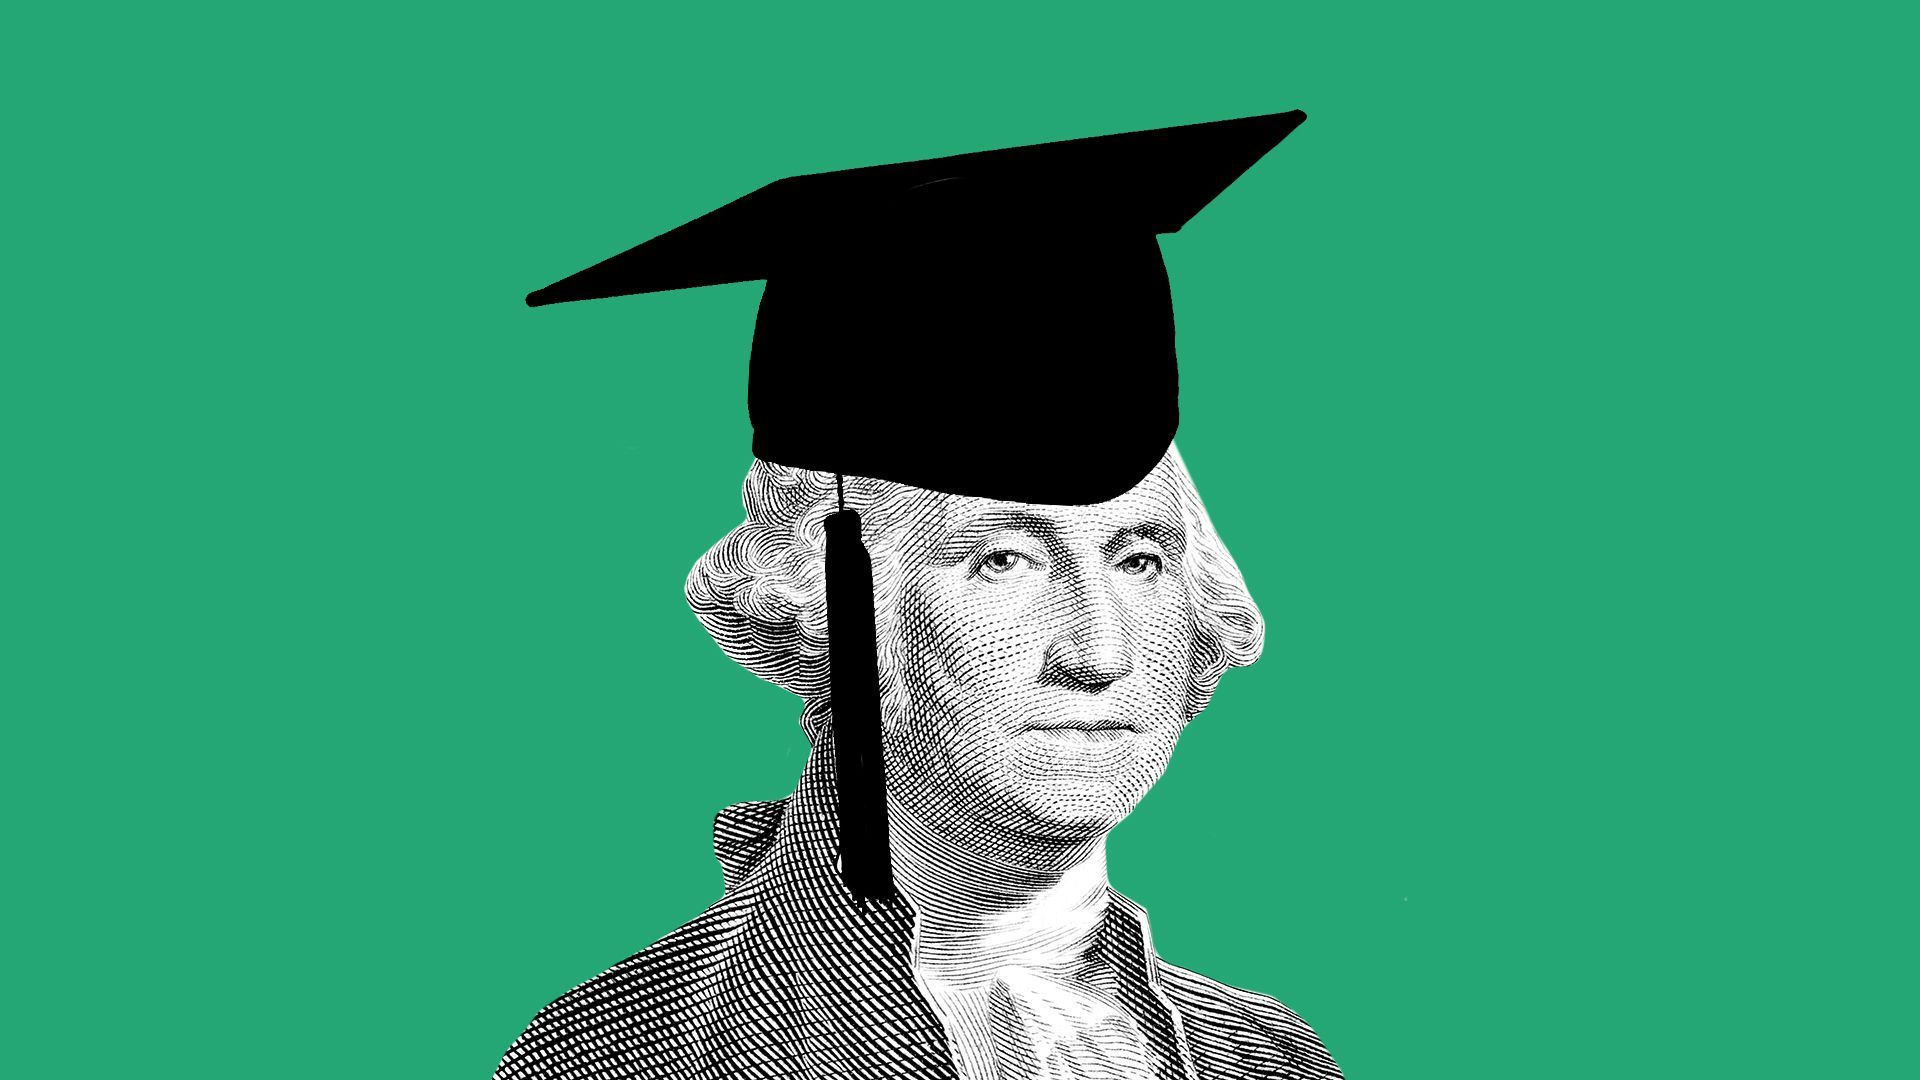 Illustration of George Washington wearing a graduation cap